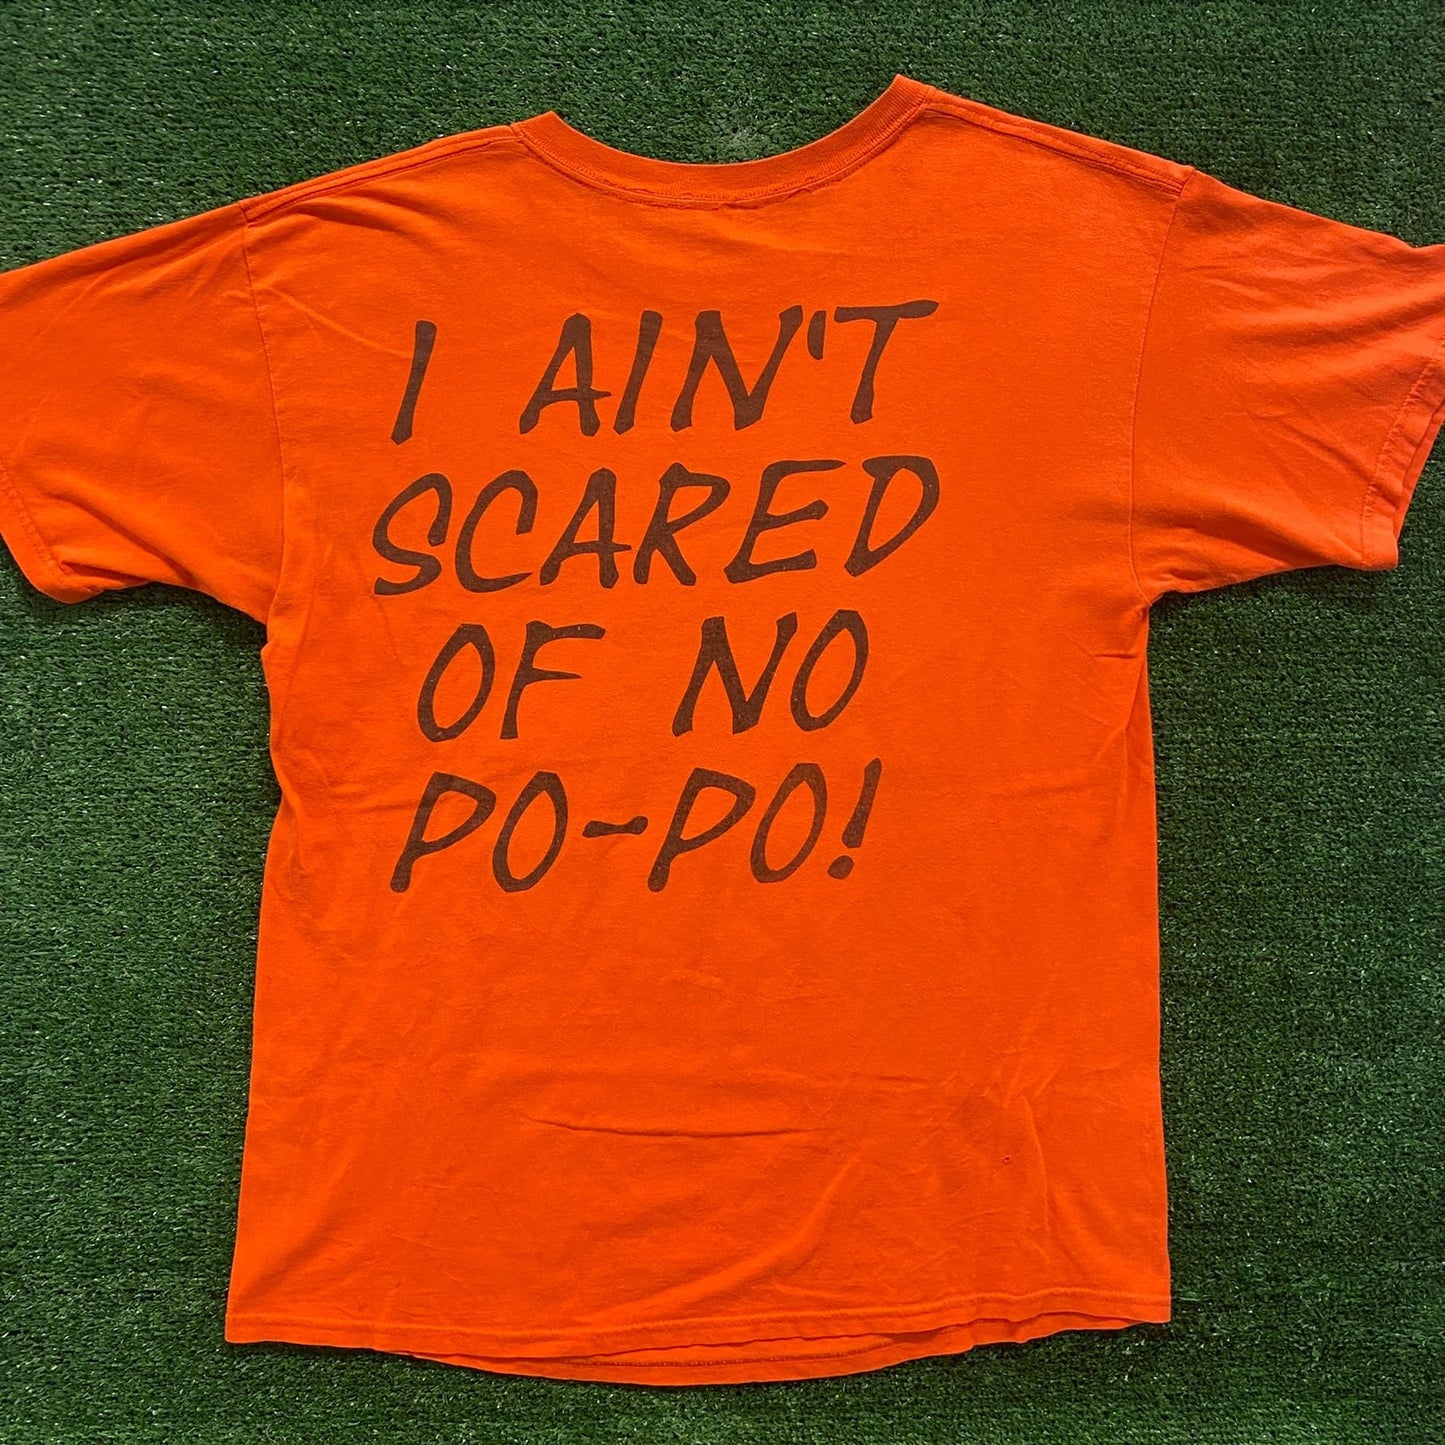 Tyler Perry Madea Jail Movie T-Shirt